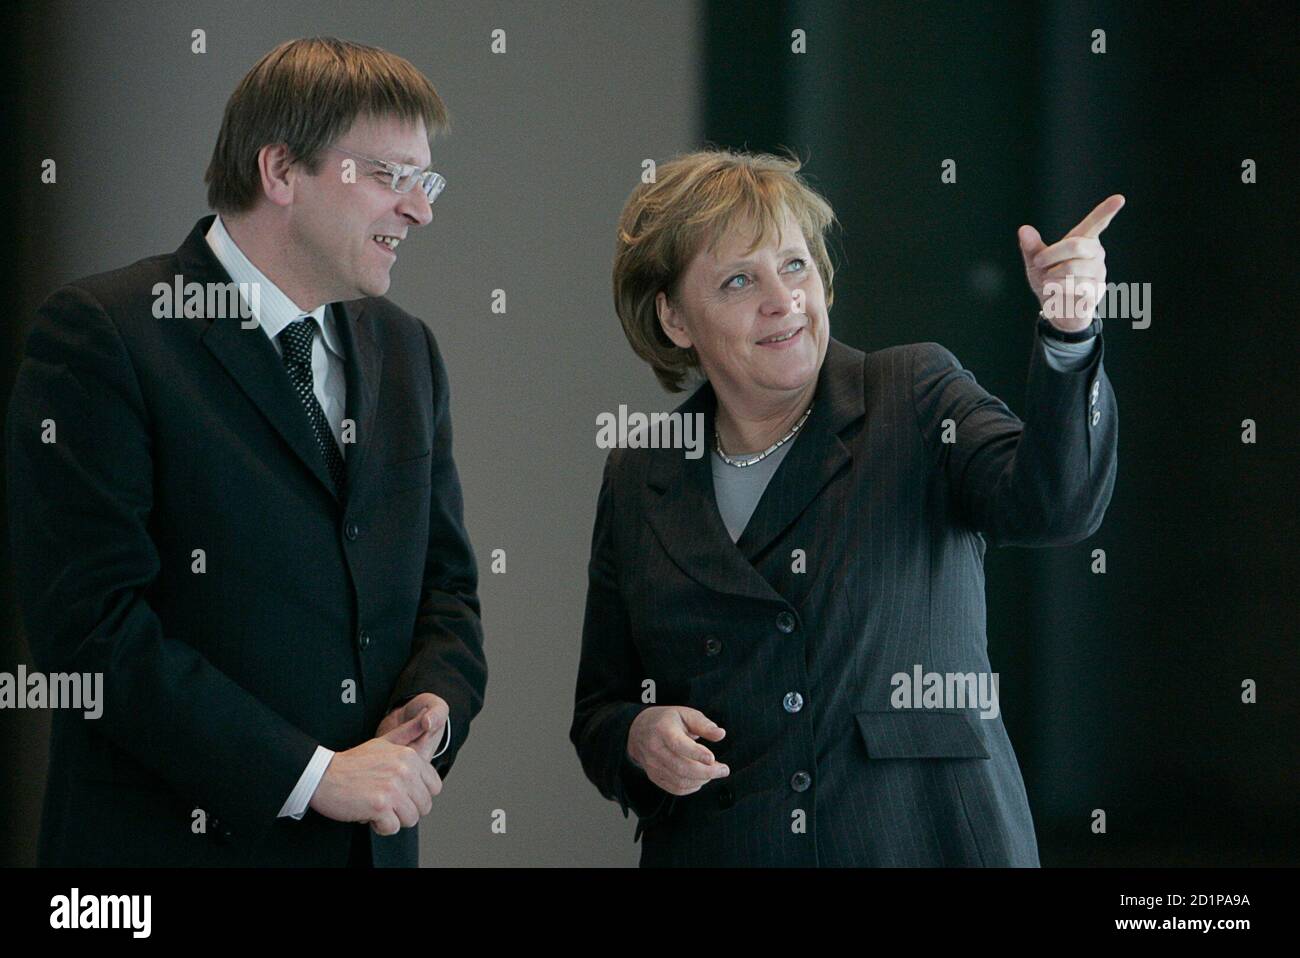 German Chancellor Angela Merkel (R) and Belgian Prime Minister Guy Verhofstadt visit the exhibition '50 Jahre Roemische Vertraege' (The Treaties Of Rome - 50th anniversary) in Berlin February 14, 2007.     REUTERS/Tobias Schwarz     (GERMANY) Stock Photo